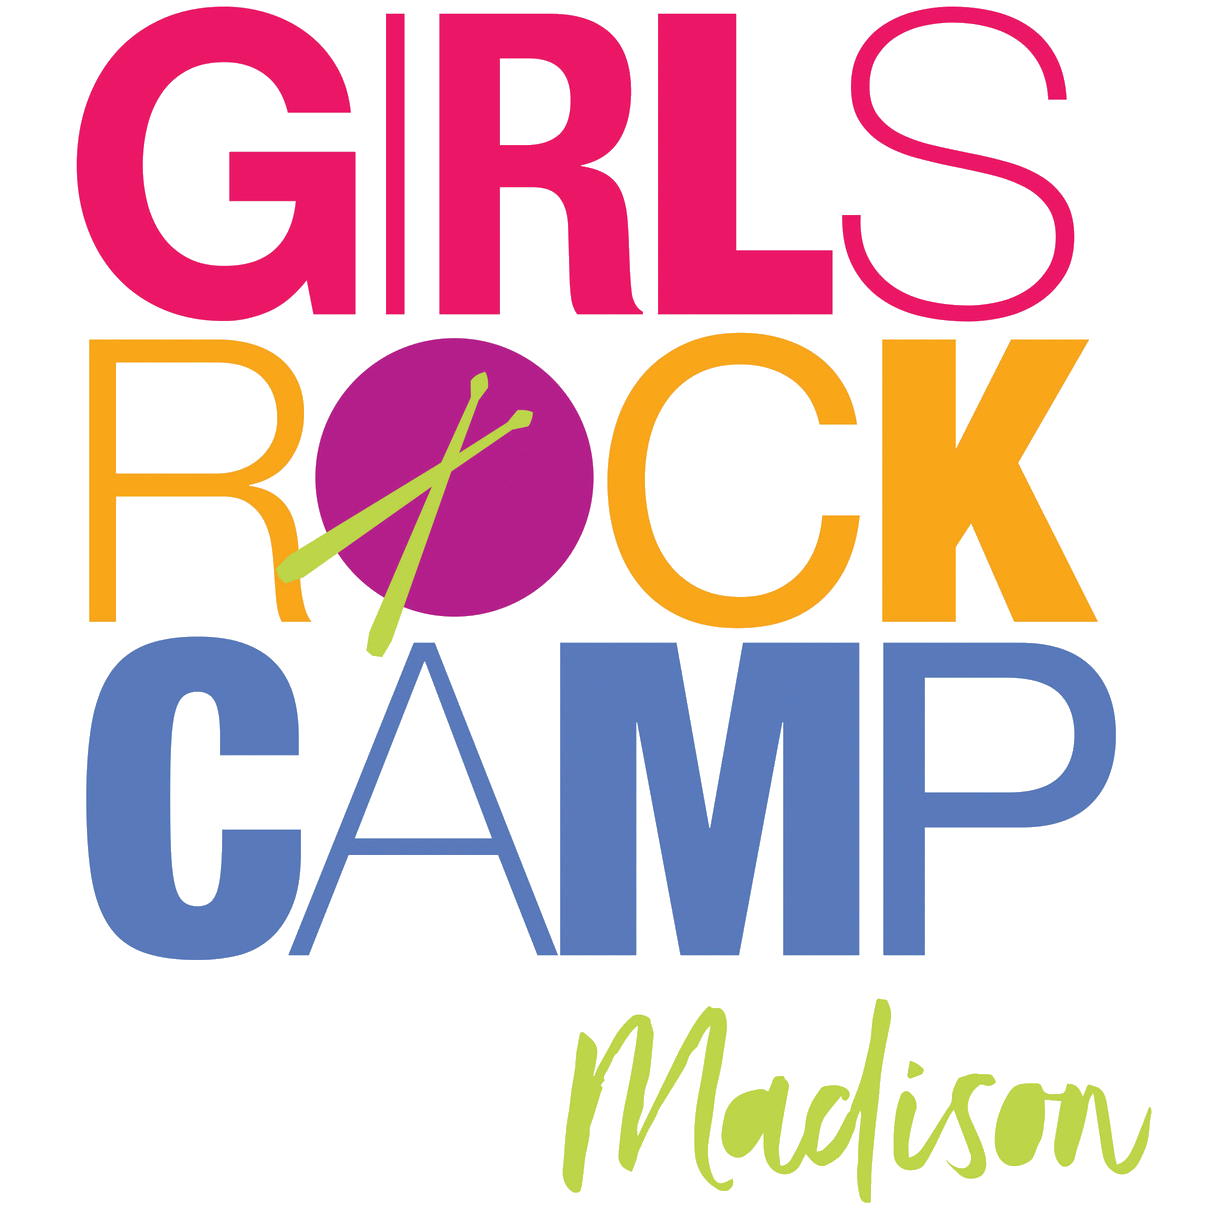 Girls Rock Camp Madison